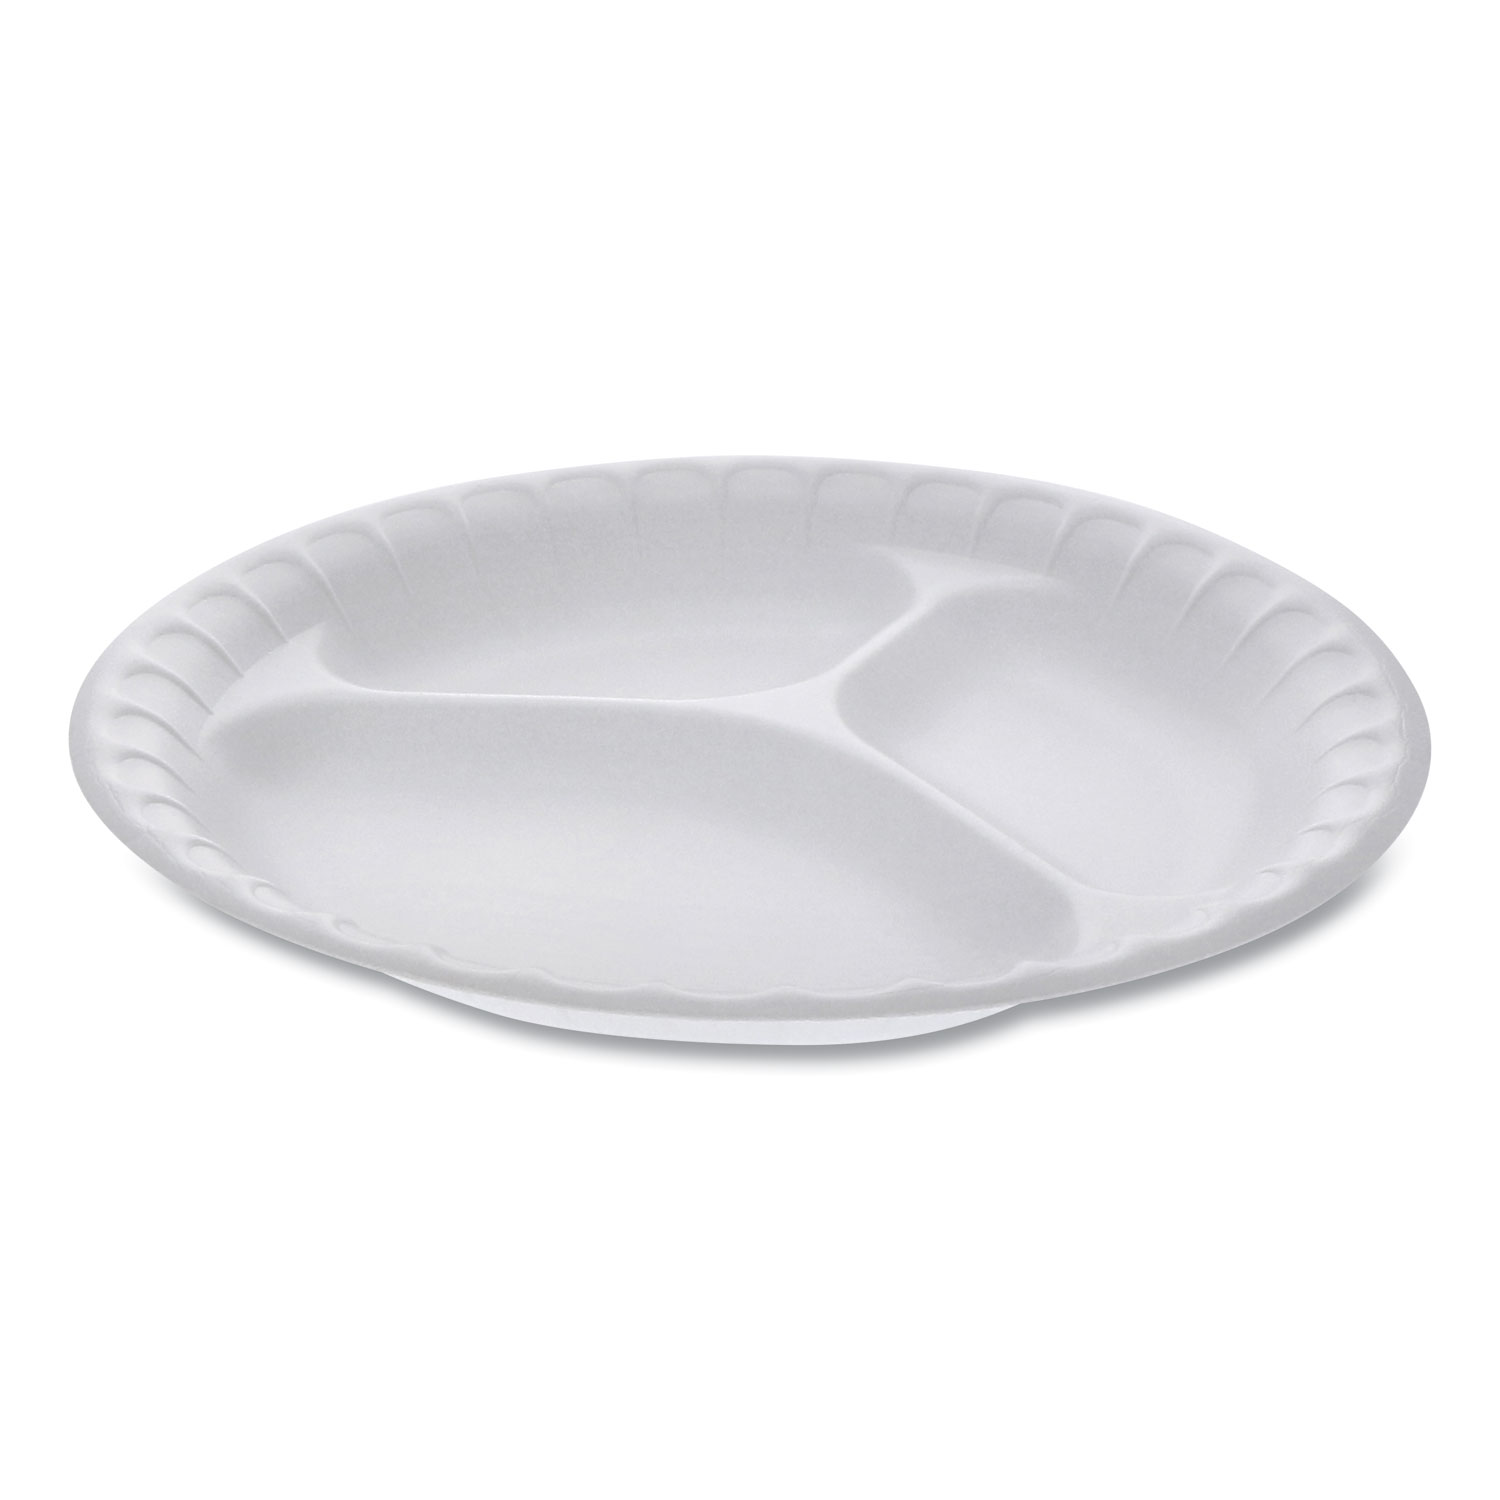 Pactiv Evergreen Unlaminated Foam Dinnerware, 3-Compartment Plate, 9" dia, White, 500/Carton